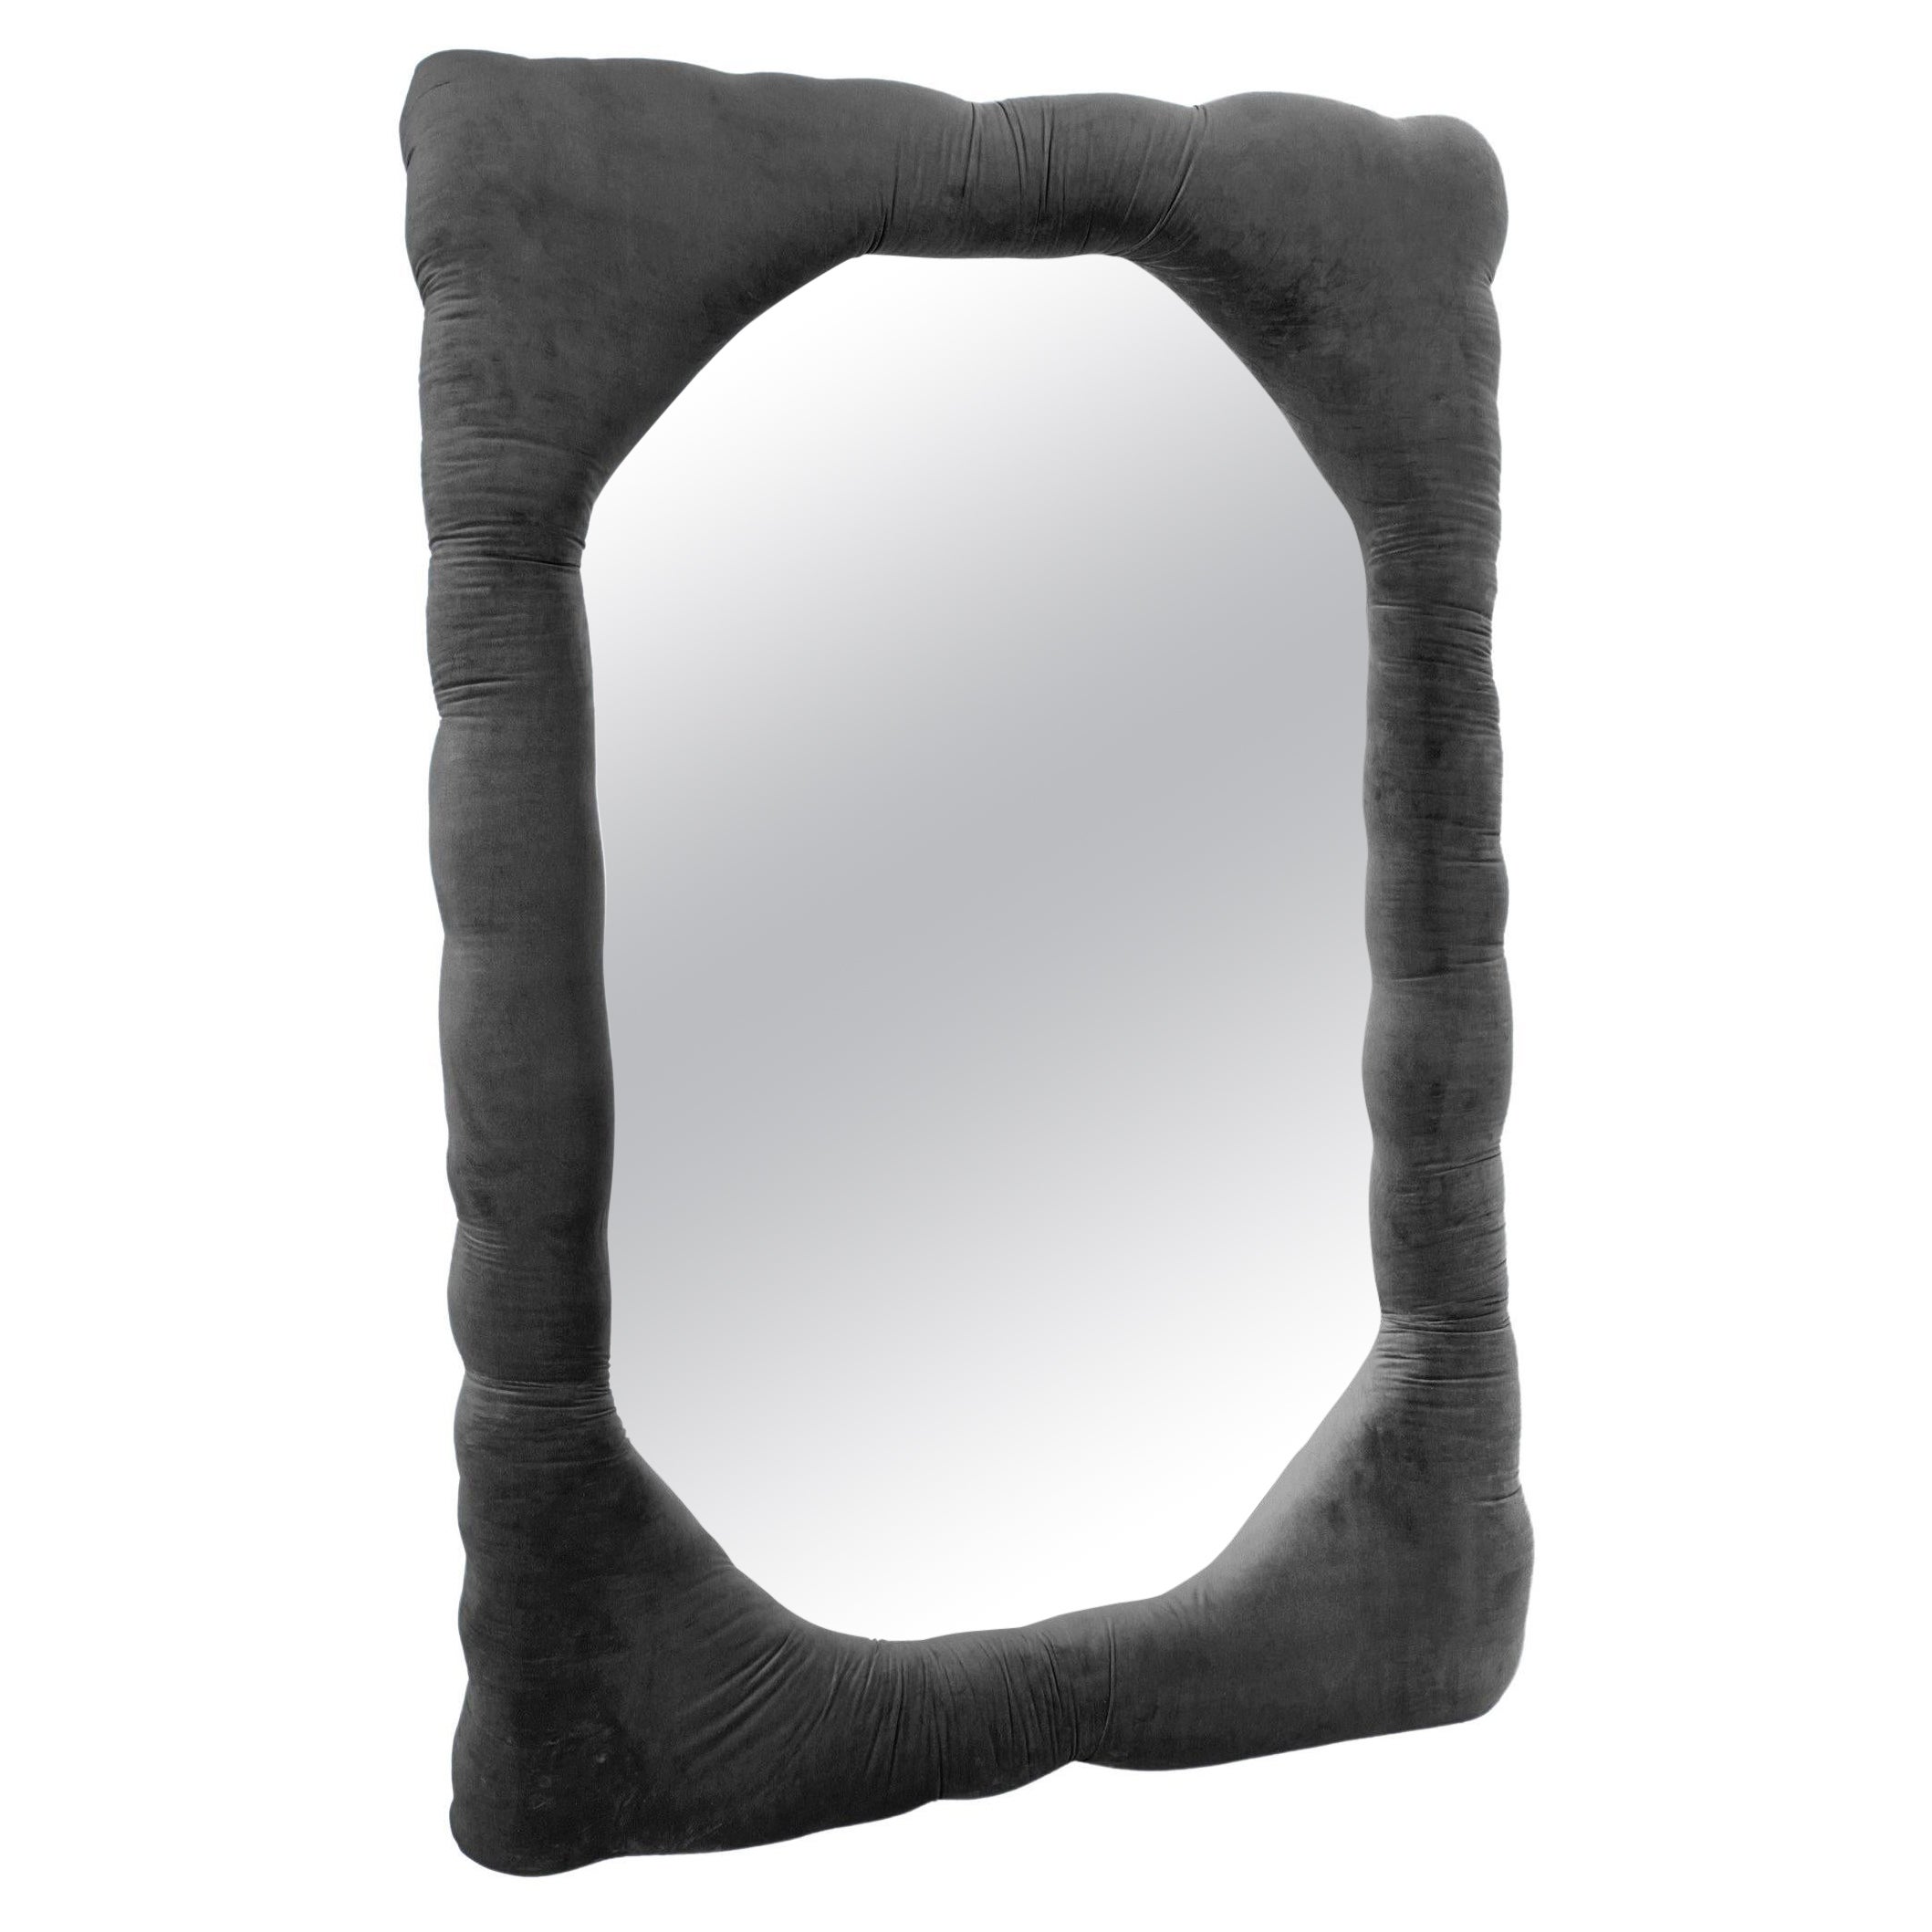 Velvet Biomorphic Mirror in Gray by Brandi Howe, REP by Tuleste Factory